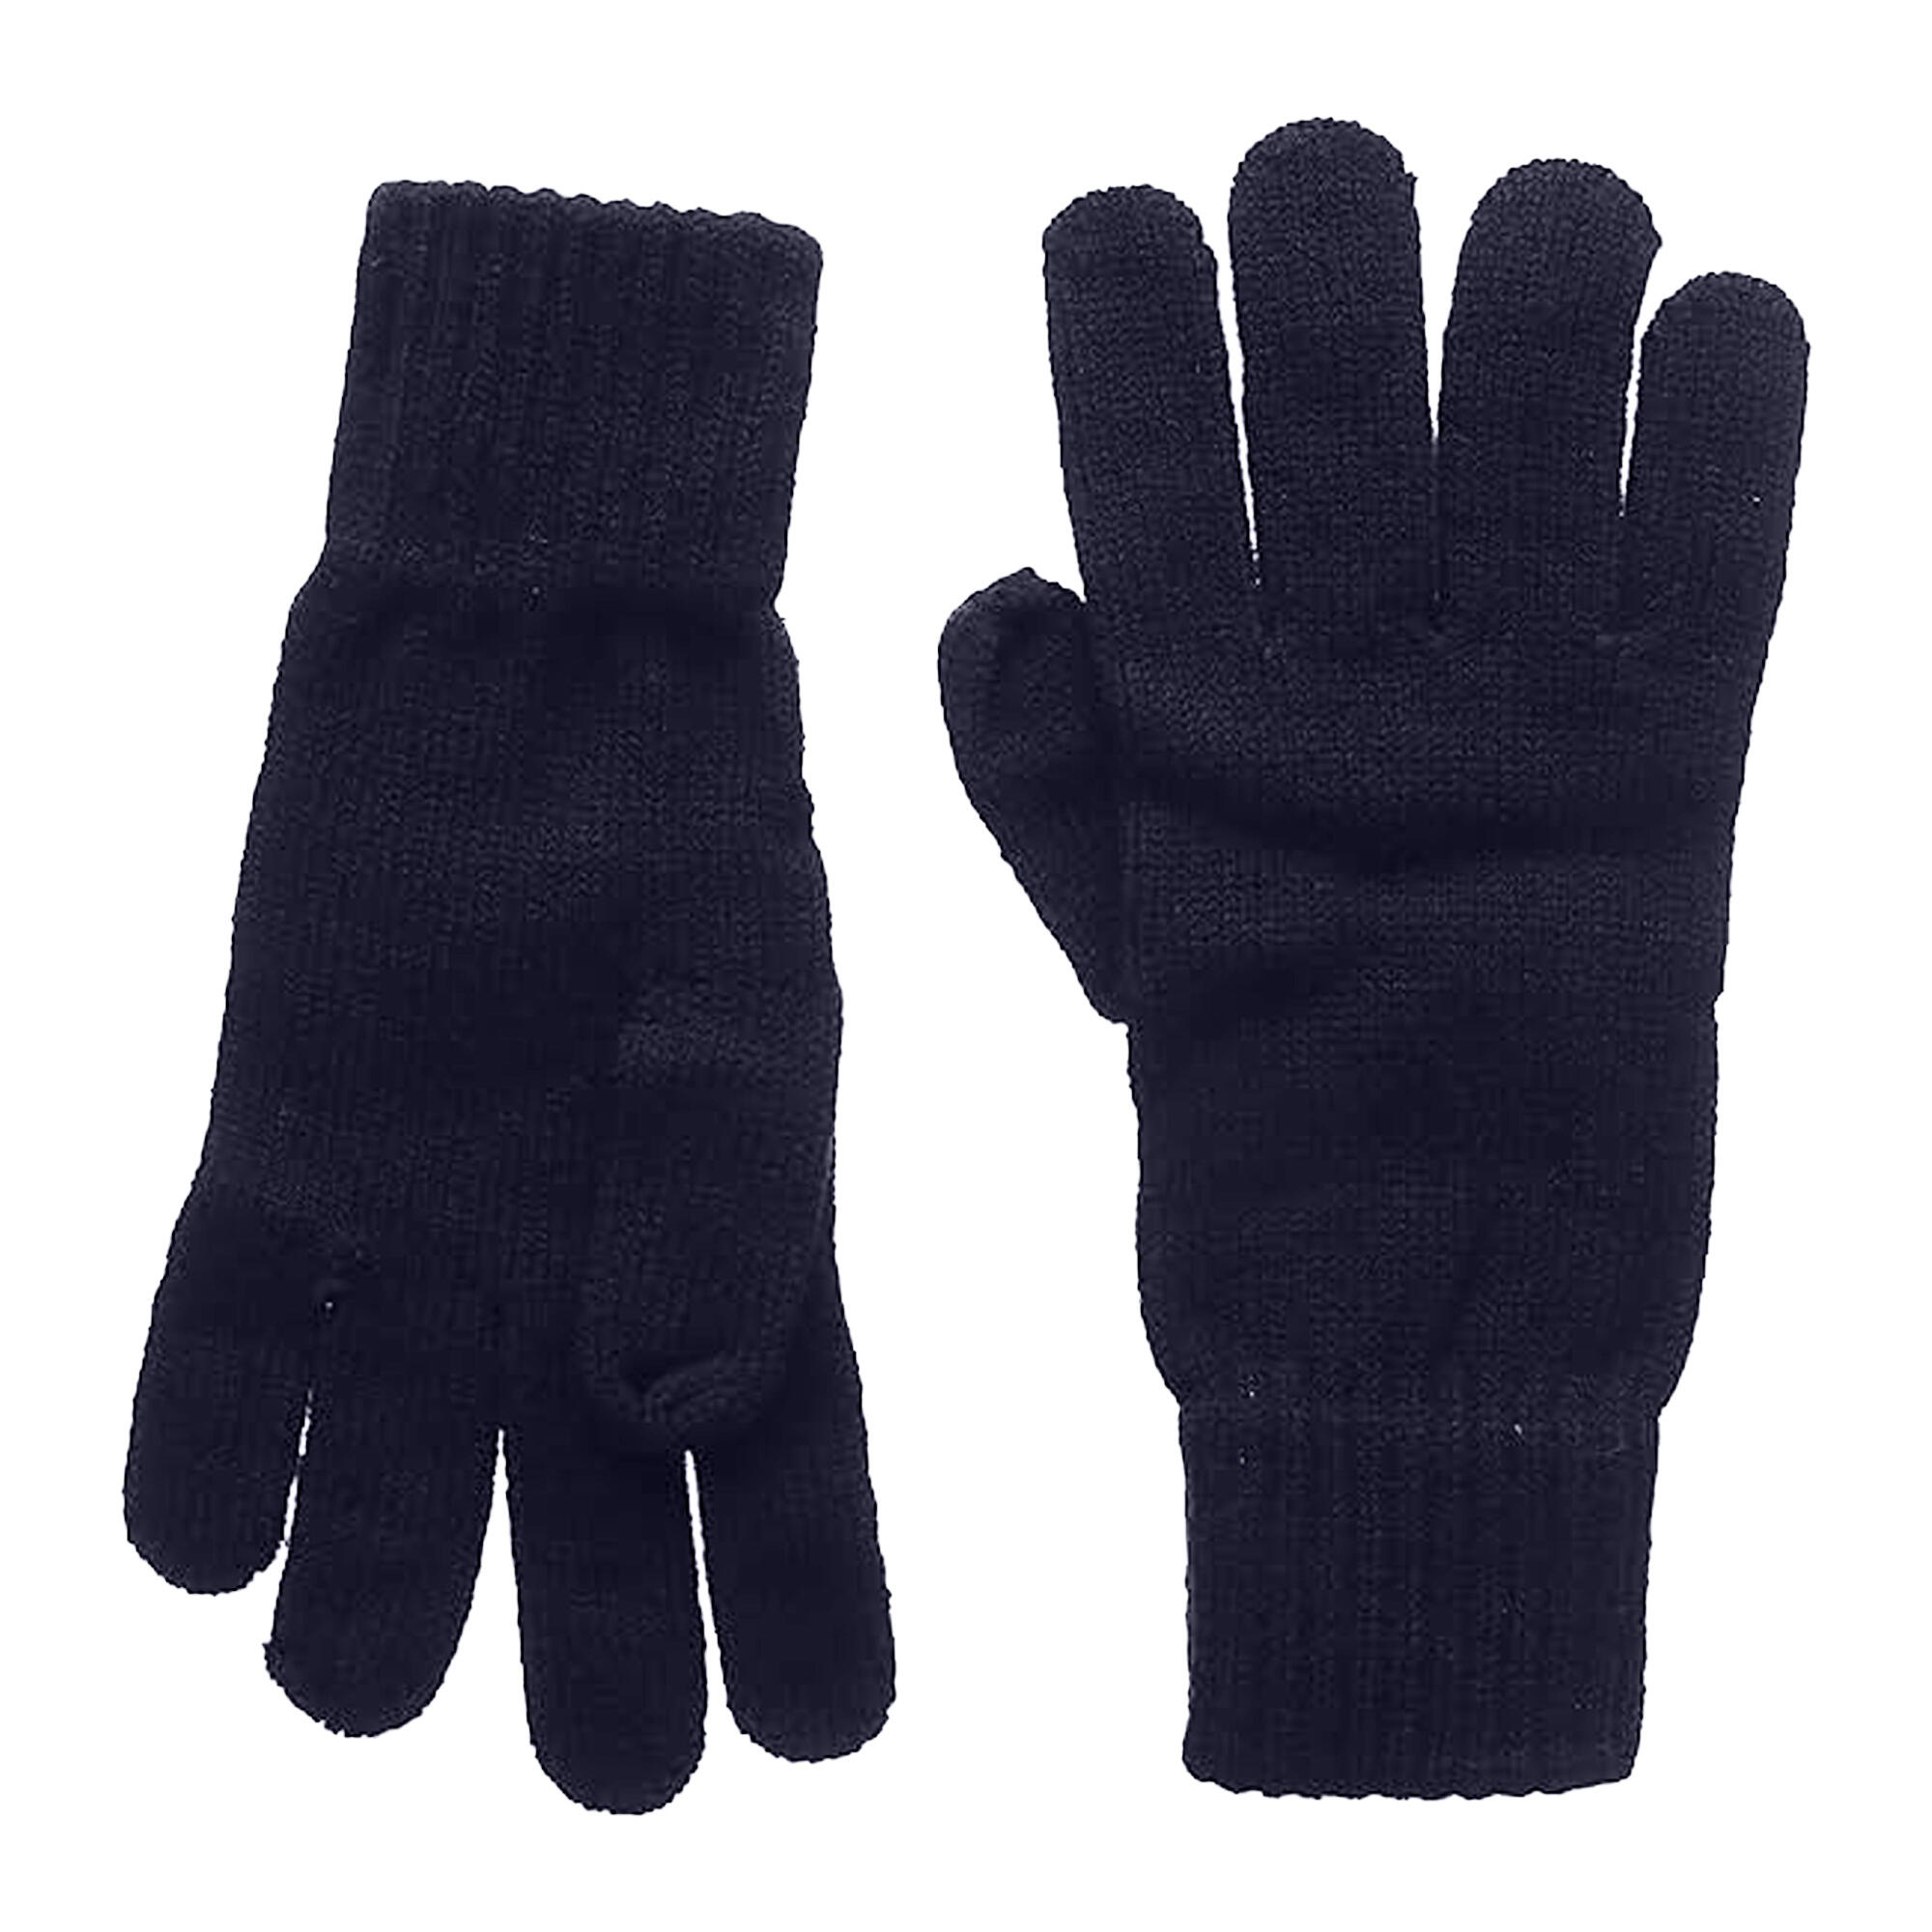 Unisex Knitted Winter Gloves (Navy) 4/5